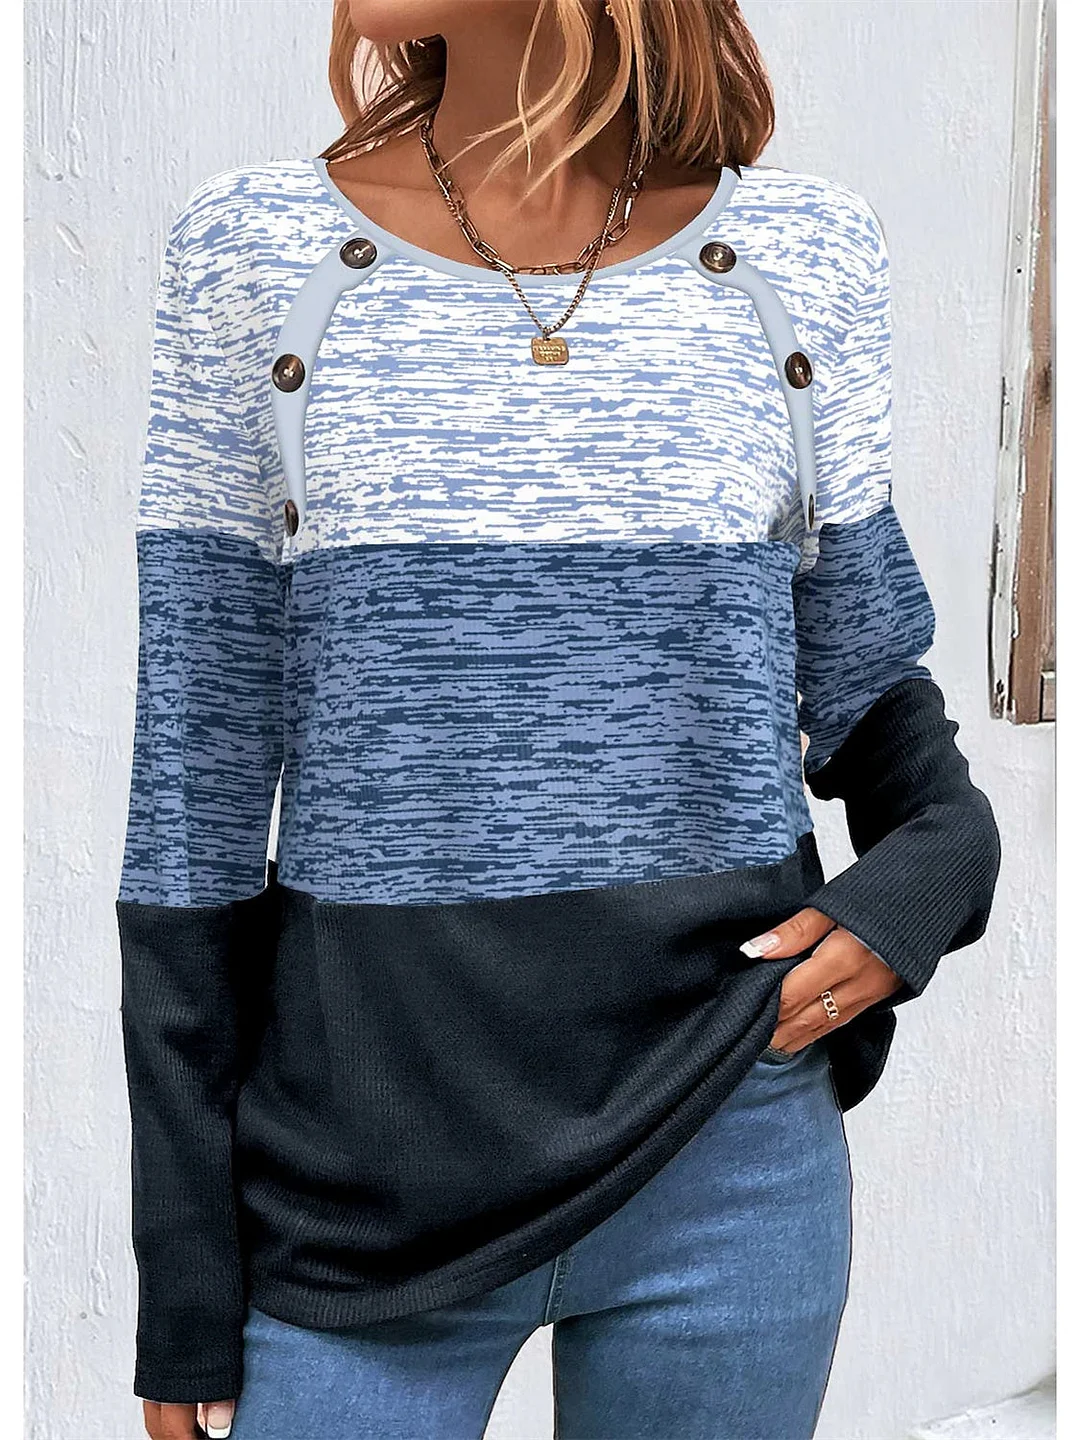 Women plus size clothing Women Long Sleeve Scoop Neck Solid Button Colorblock Tops-Nordswear